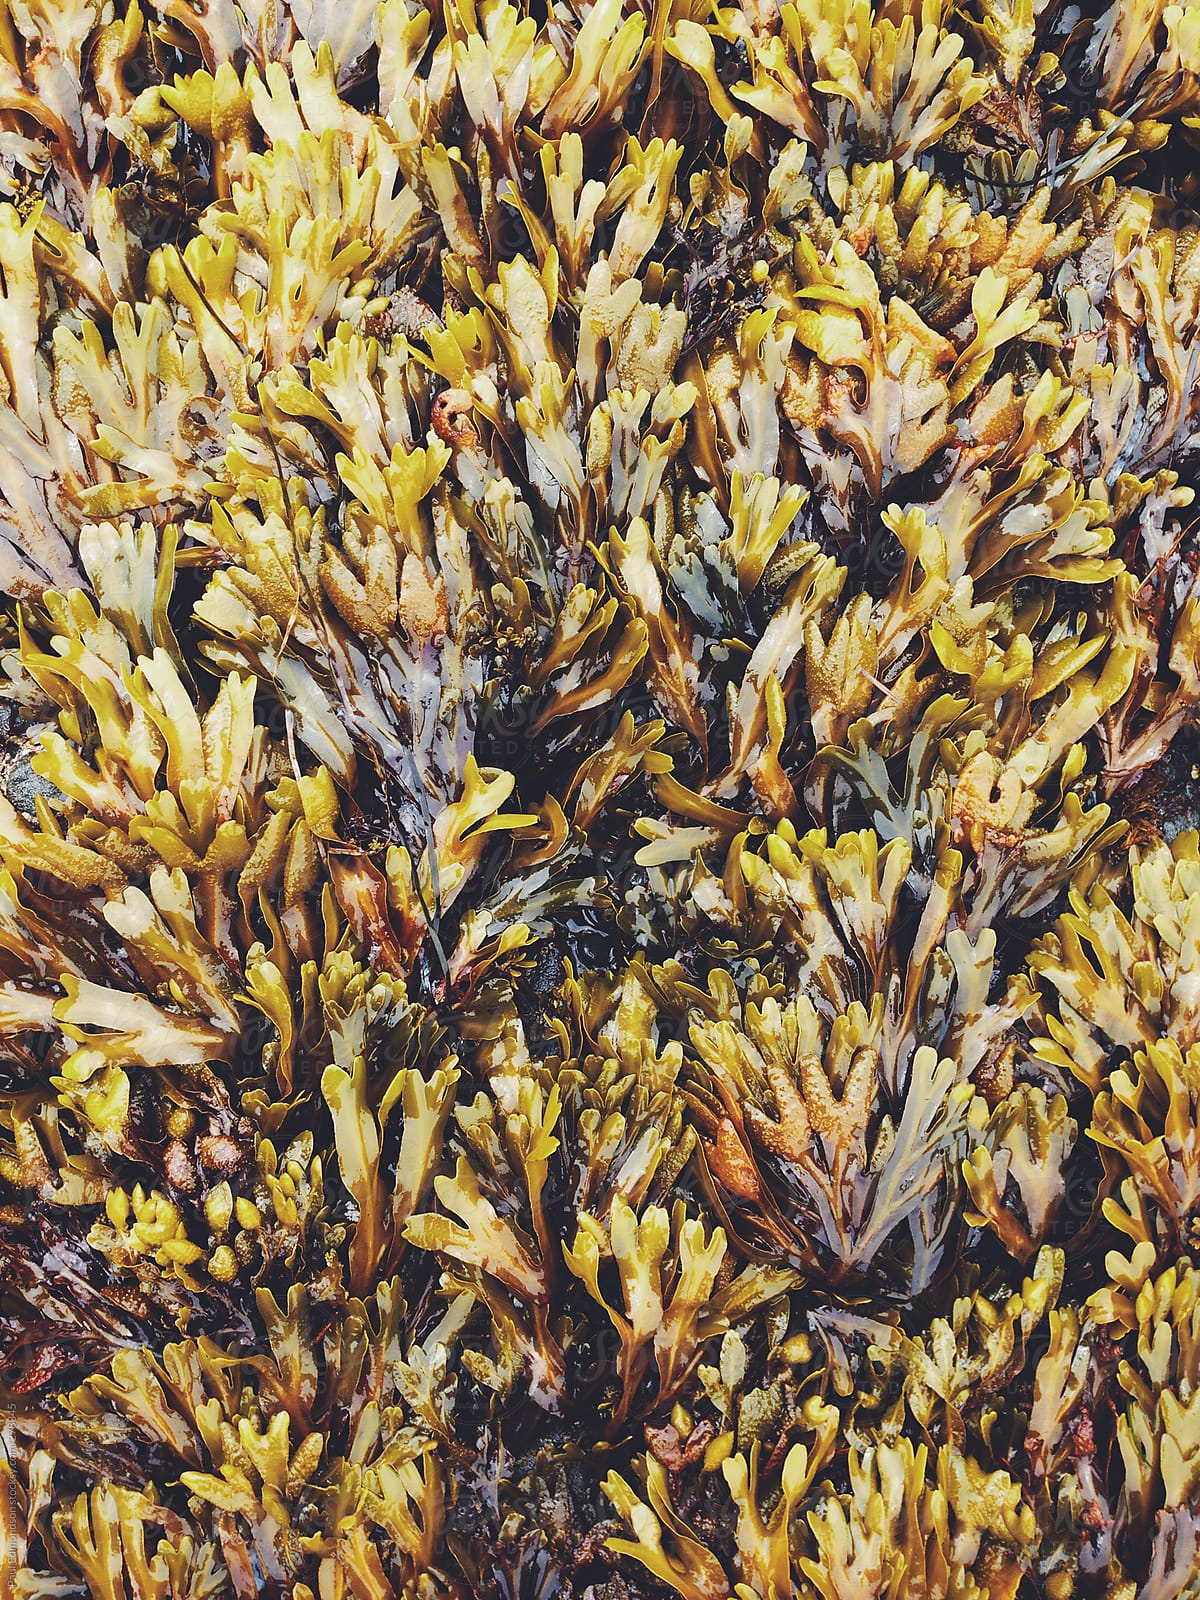 Close up of rockweed seaweed at low tide